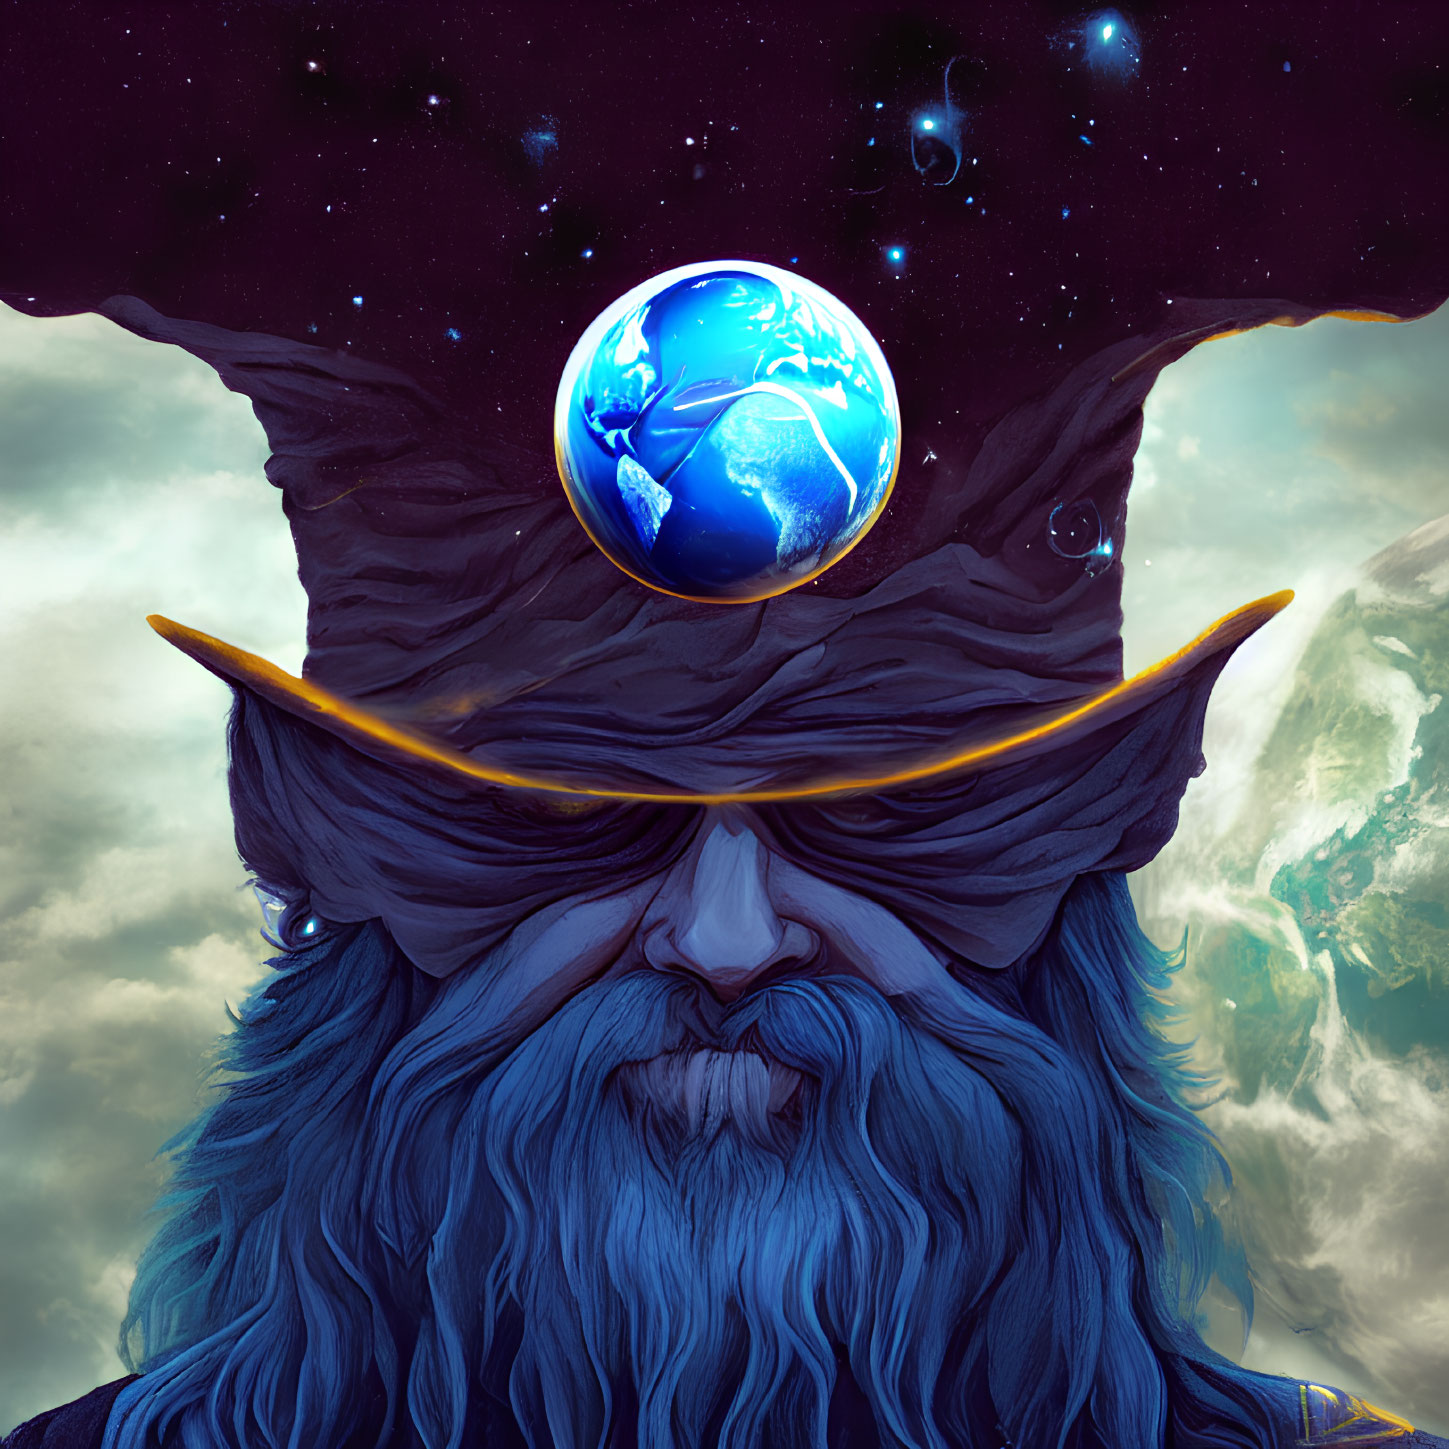 Blue-bearded mystical figure with Earth on hat in cosmic scene.